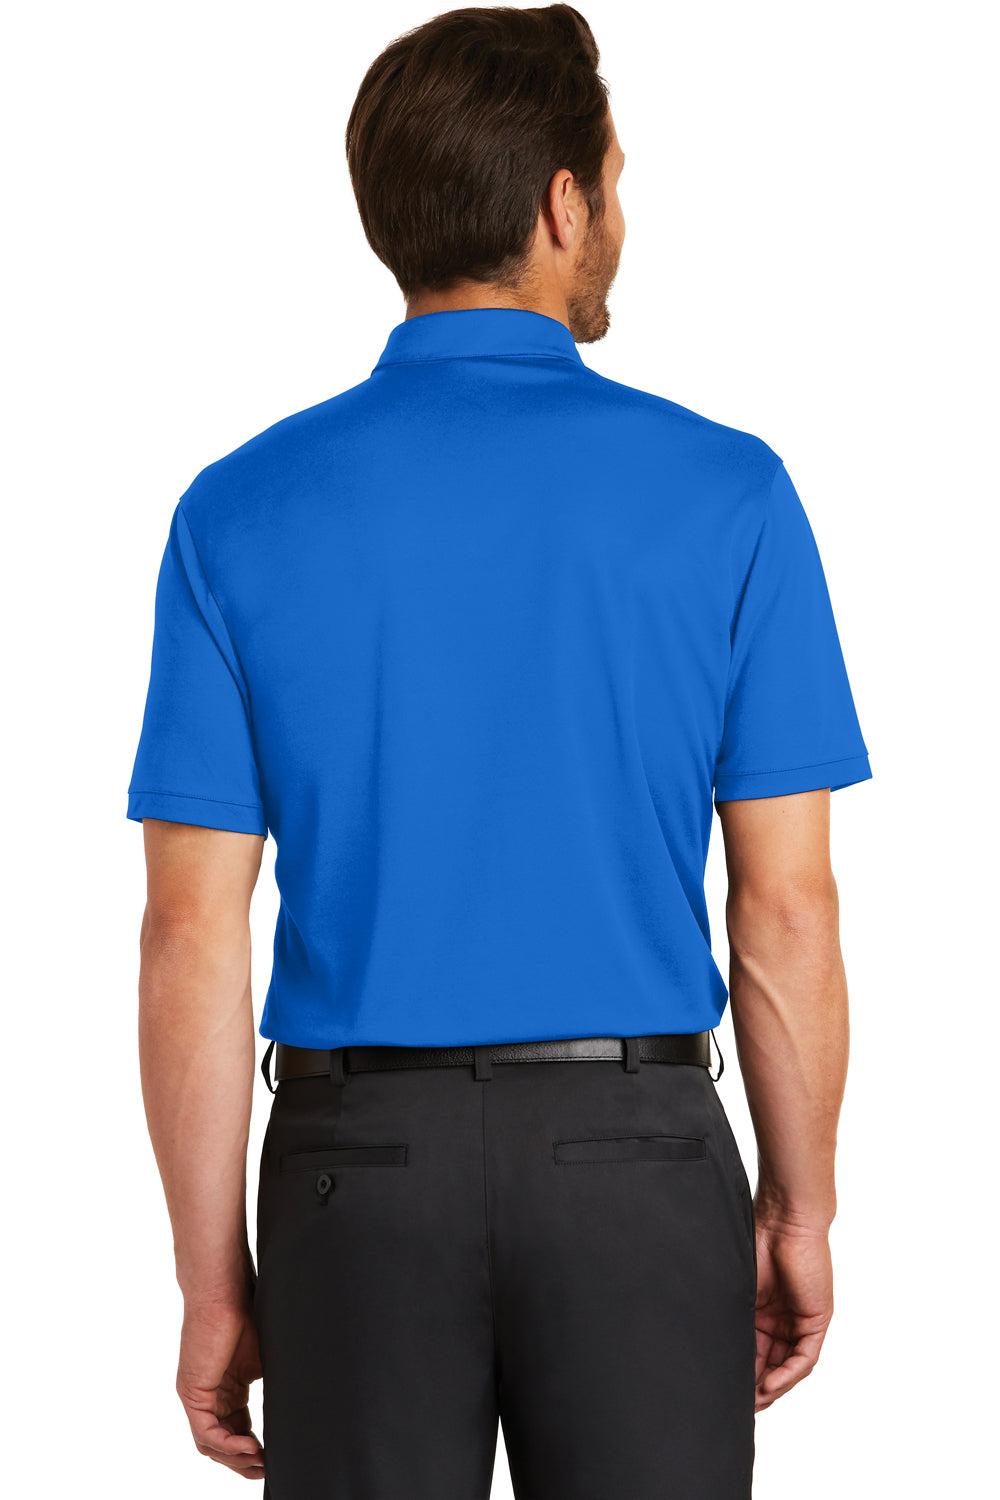 Nike 881655 Mens Dri-Fit Moisture Wicking Short Sleeve Polo Shirt Sapphire Blue/Black Back